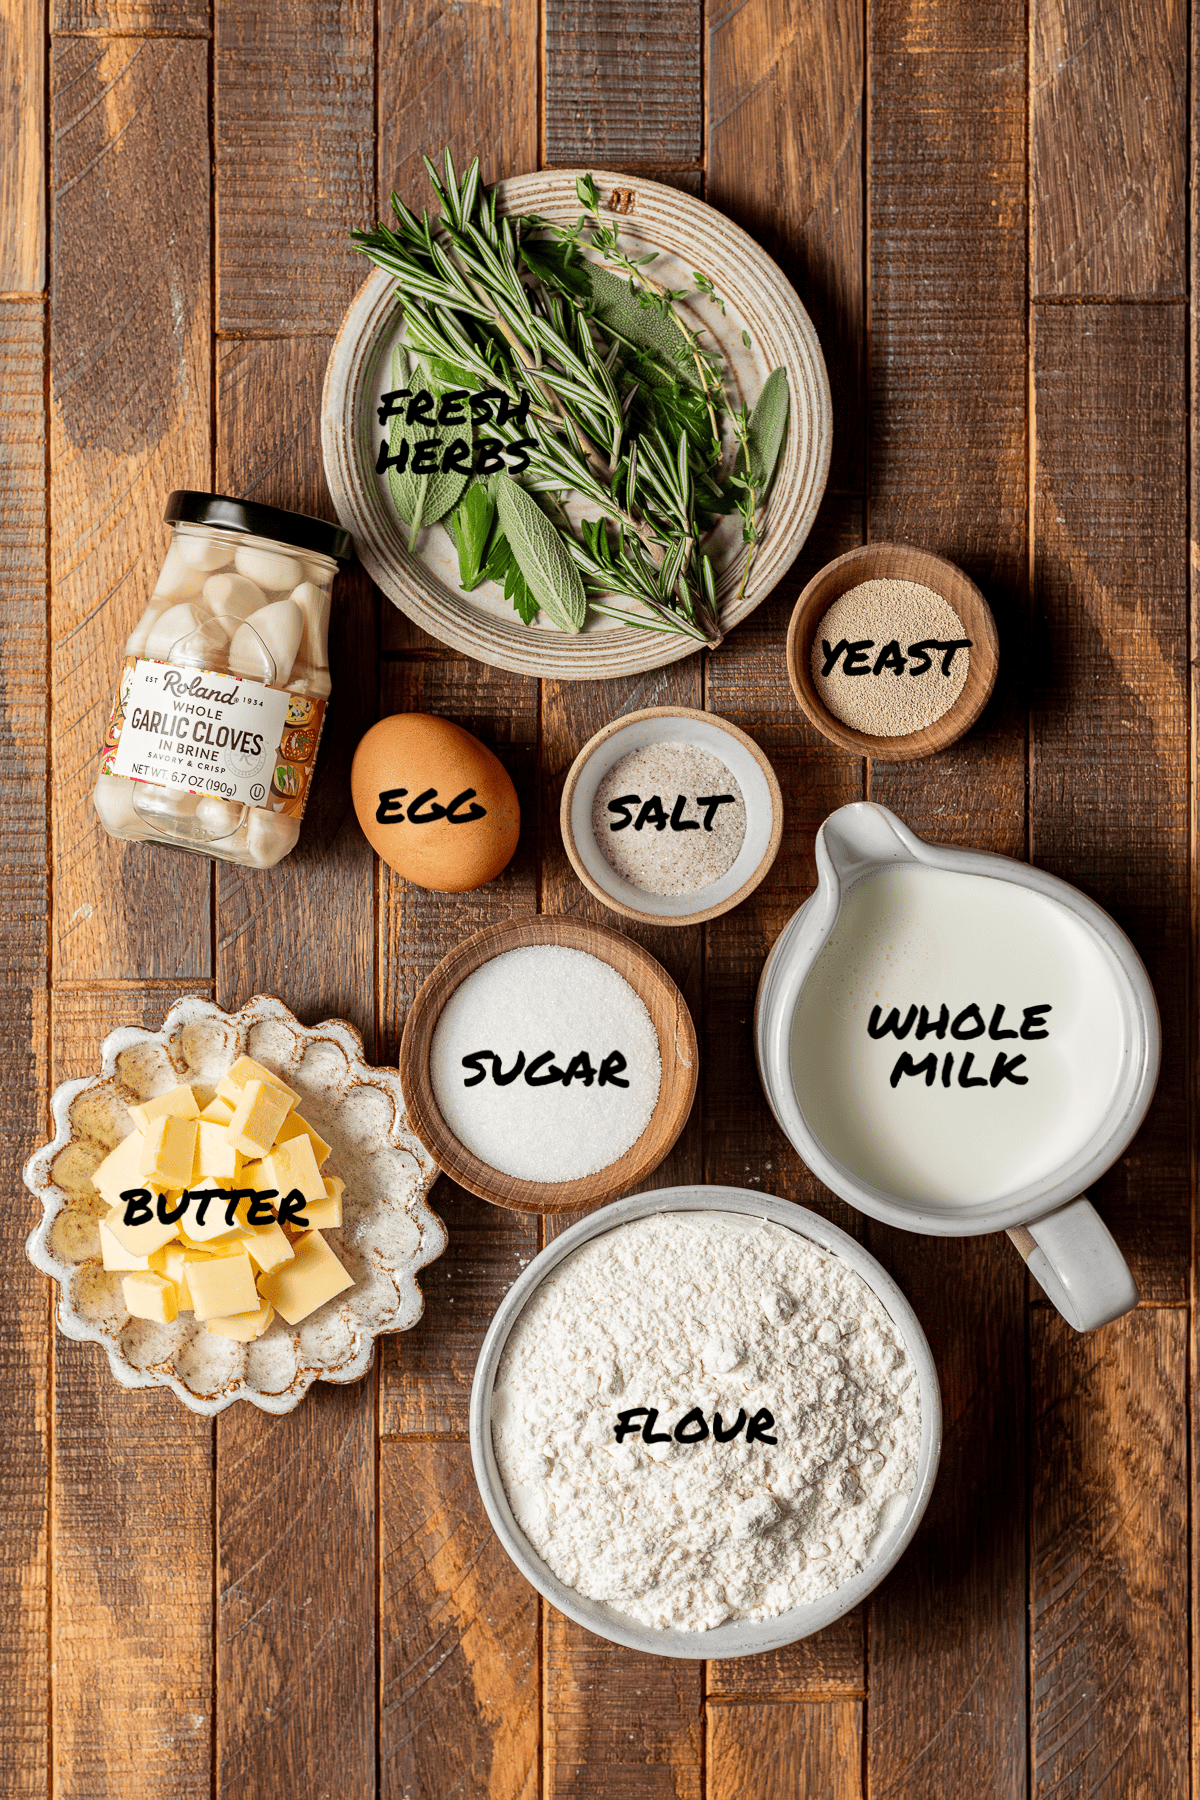 ingredients for garlic herb Parker house rolls.